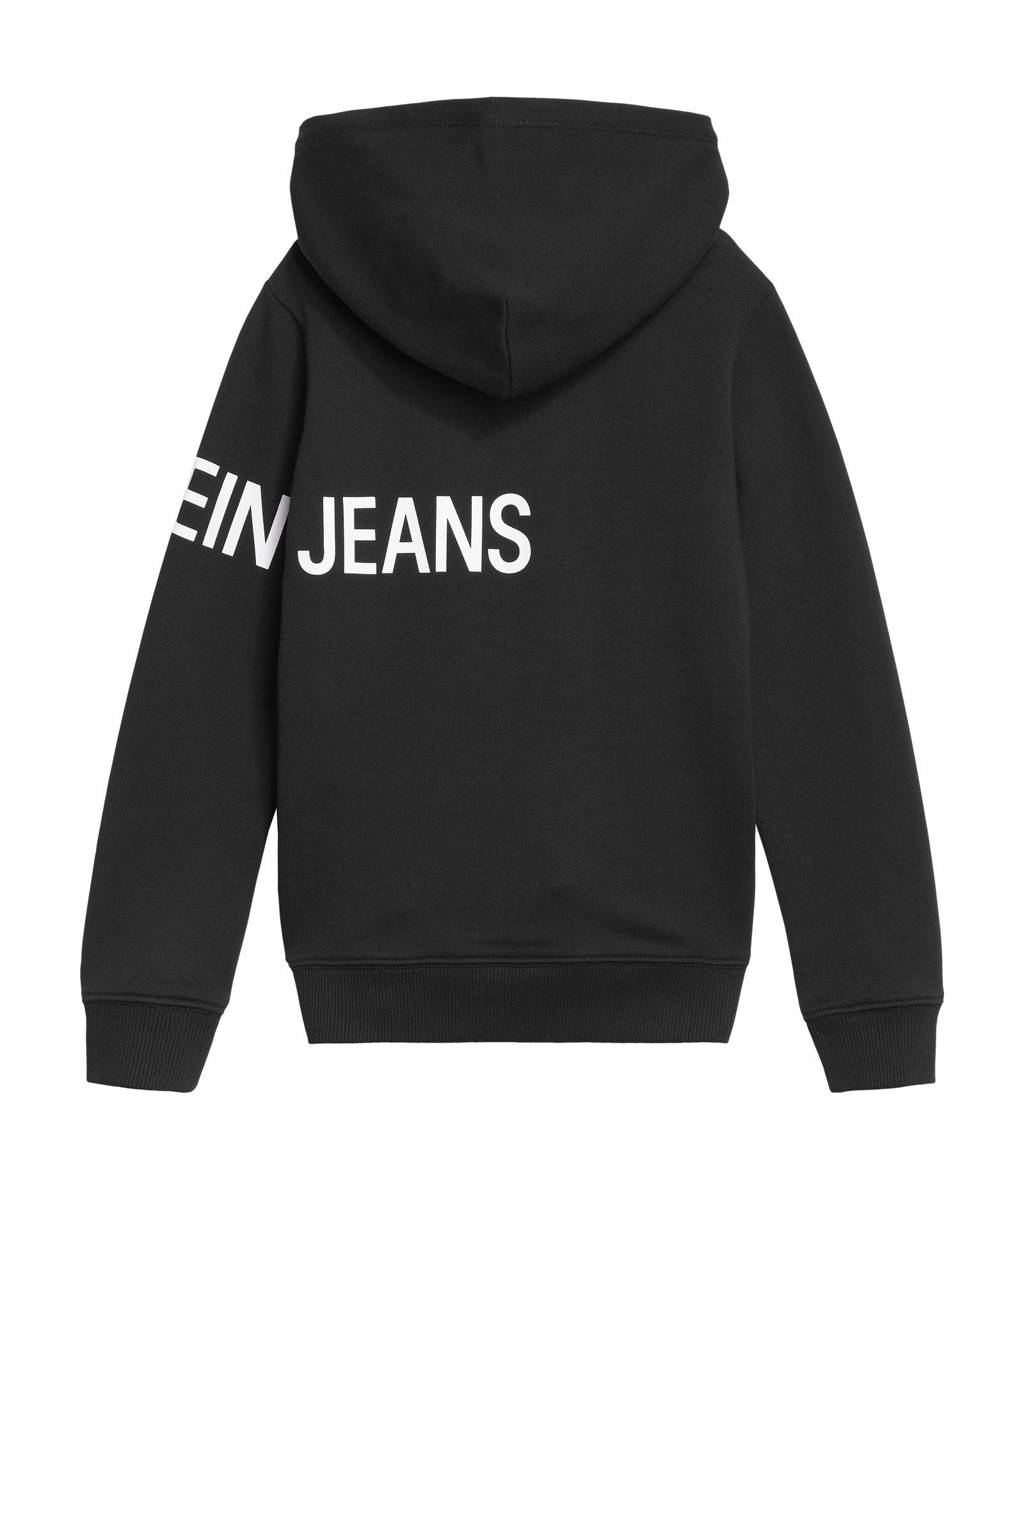 CALVIN KLEIN JEANS hoodie met logo zwart/wit